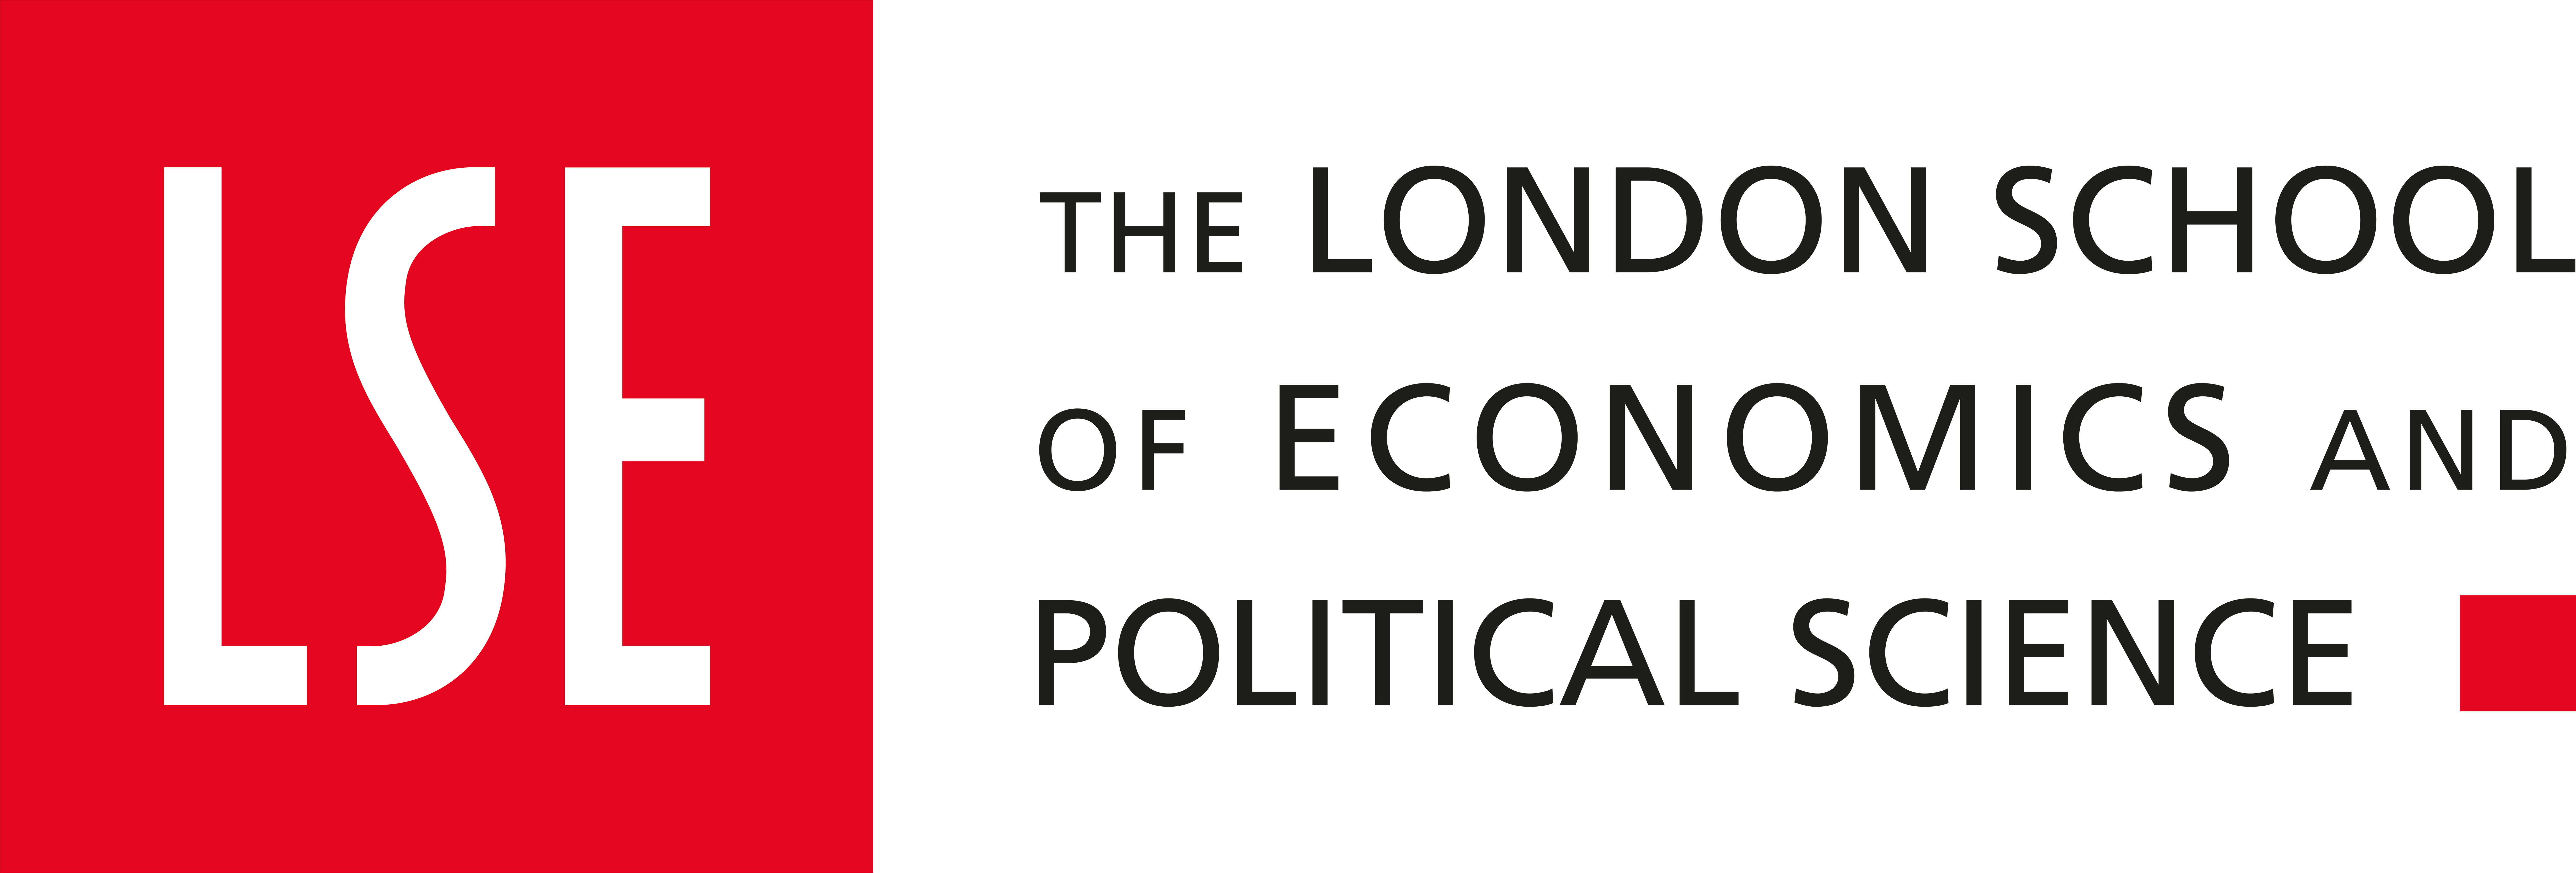 London School of Economics and Political Science, University of London